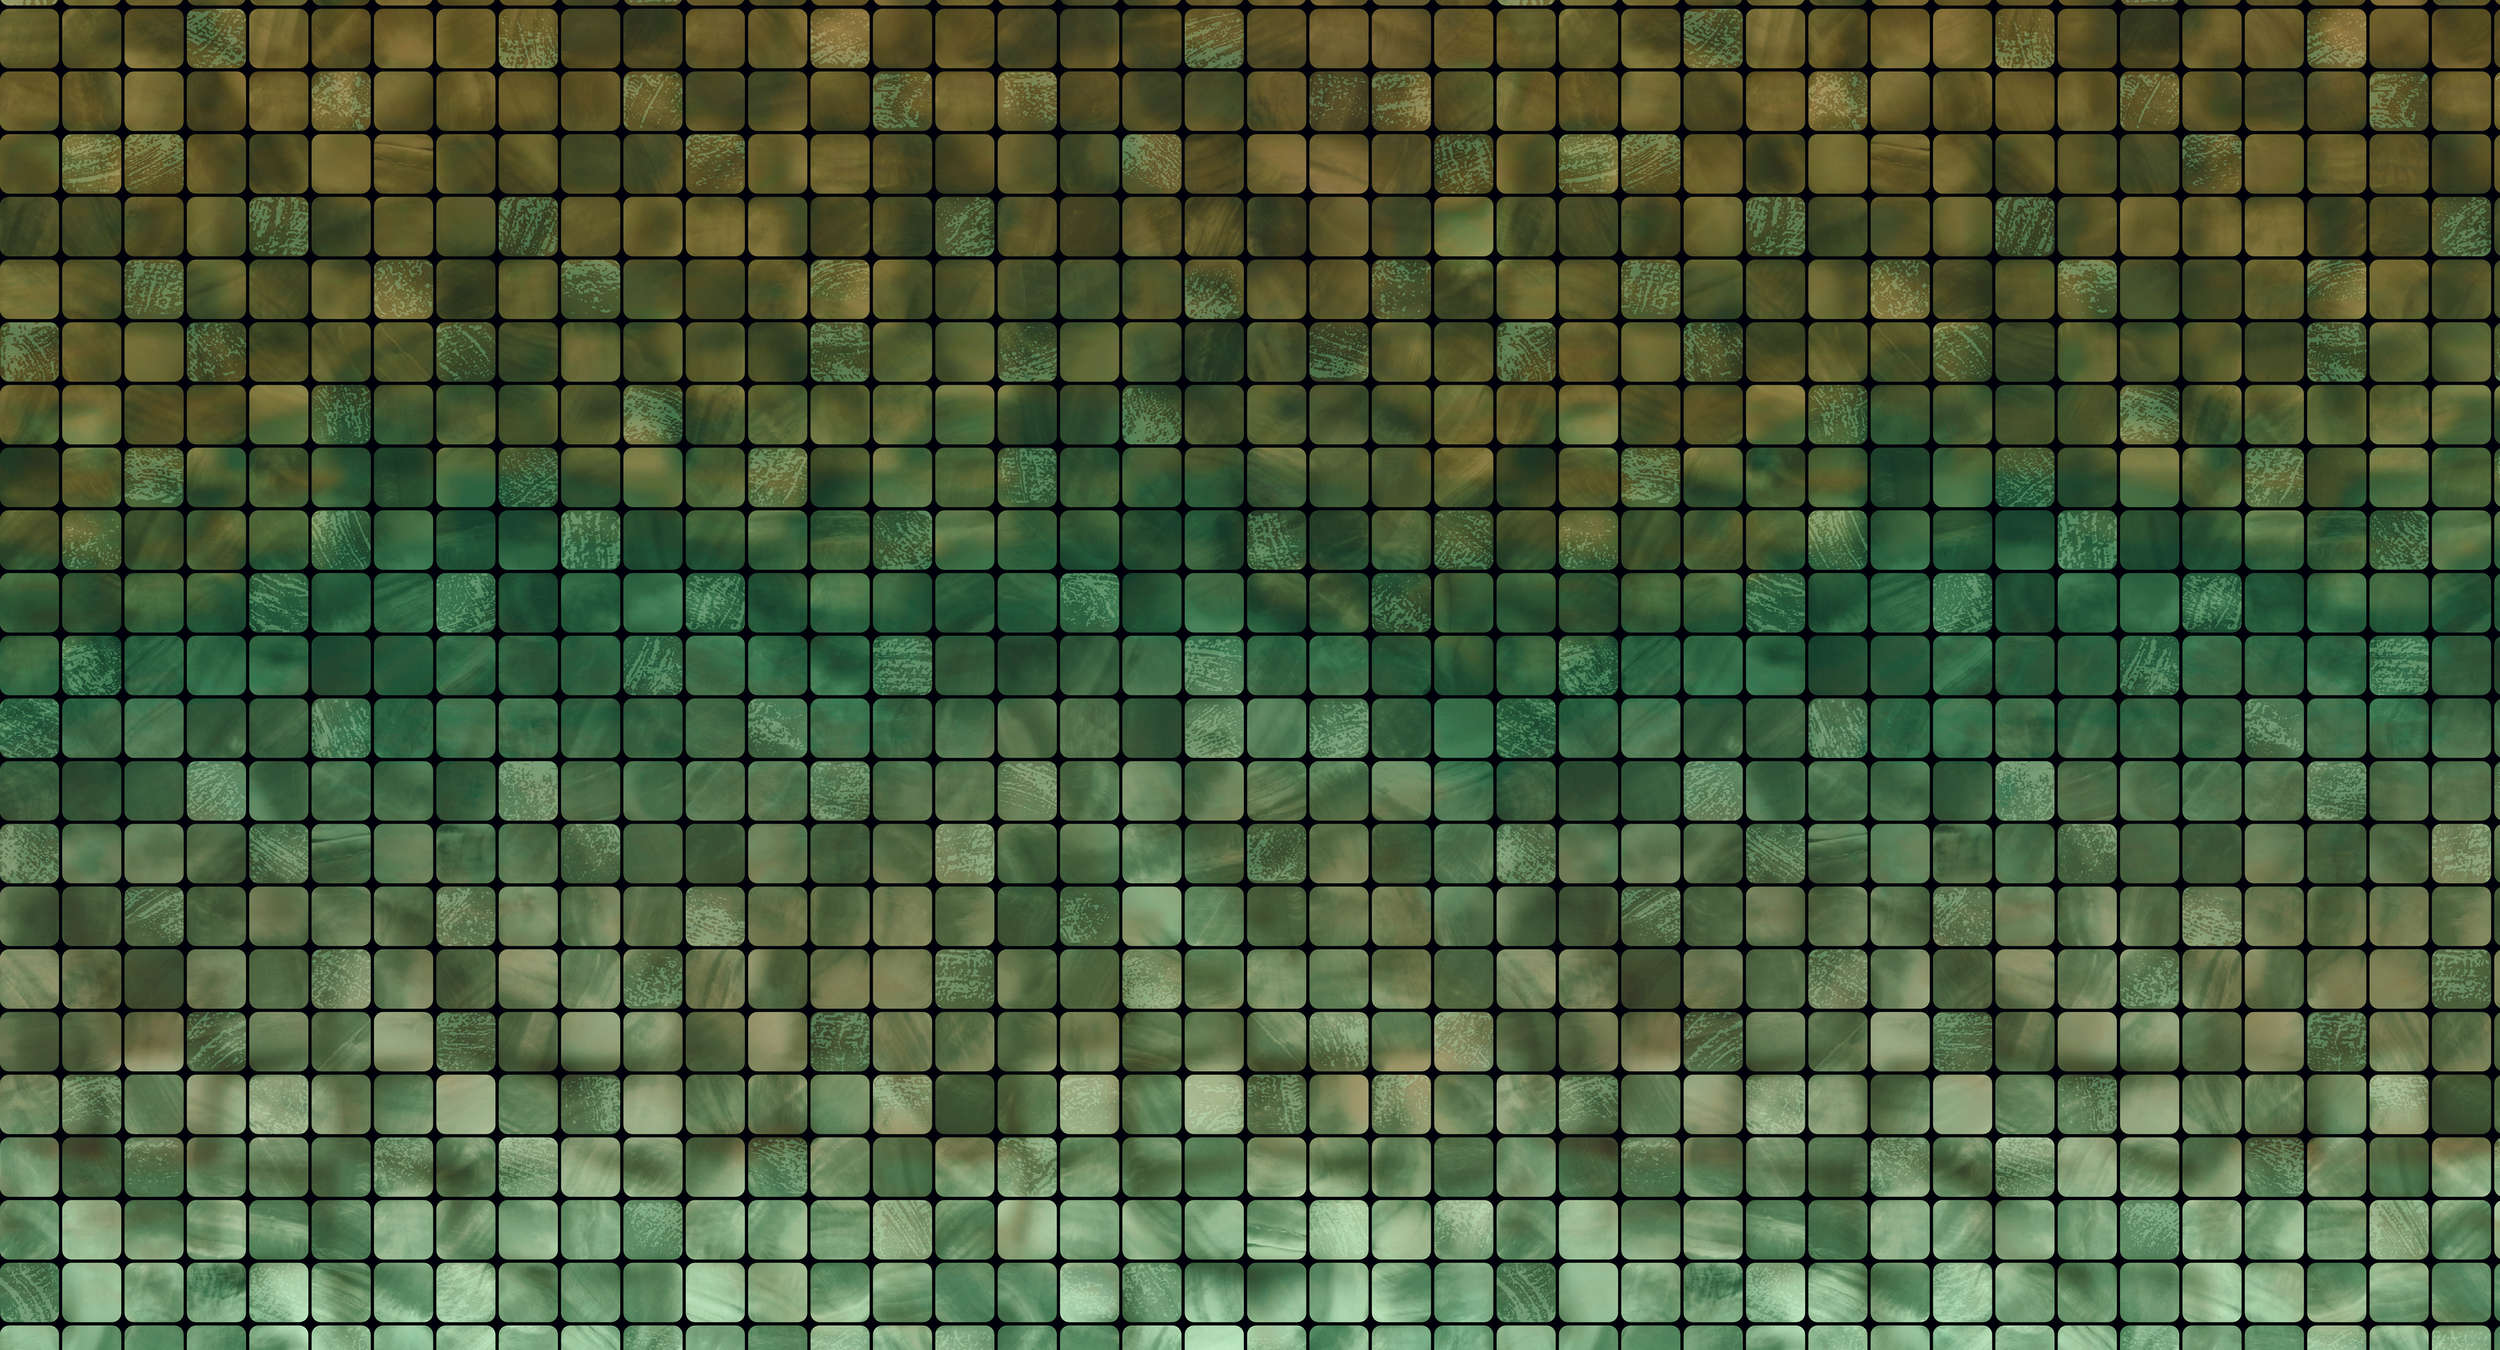             Fototapete Fliesen-Muster & modernes Mosaik – Grün, Creme
        